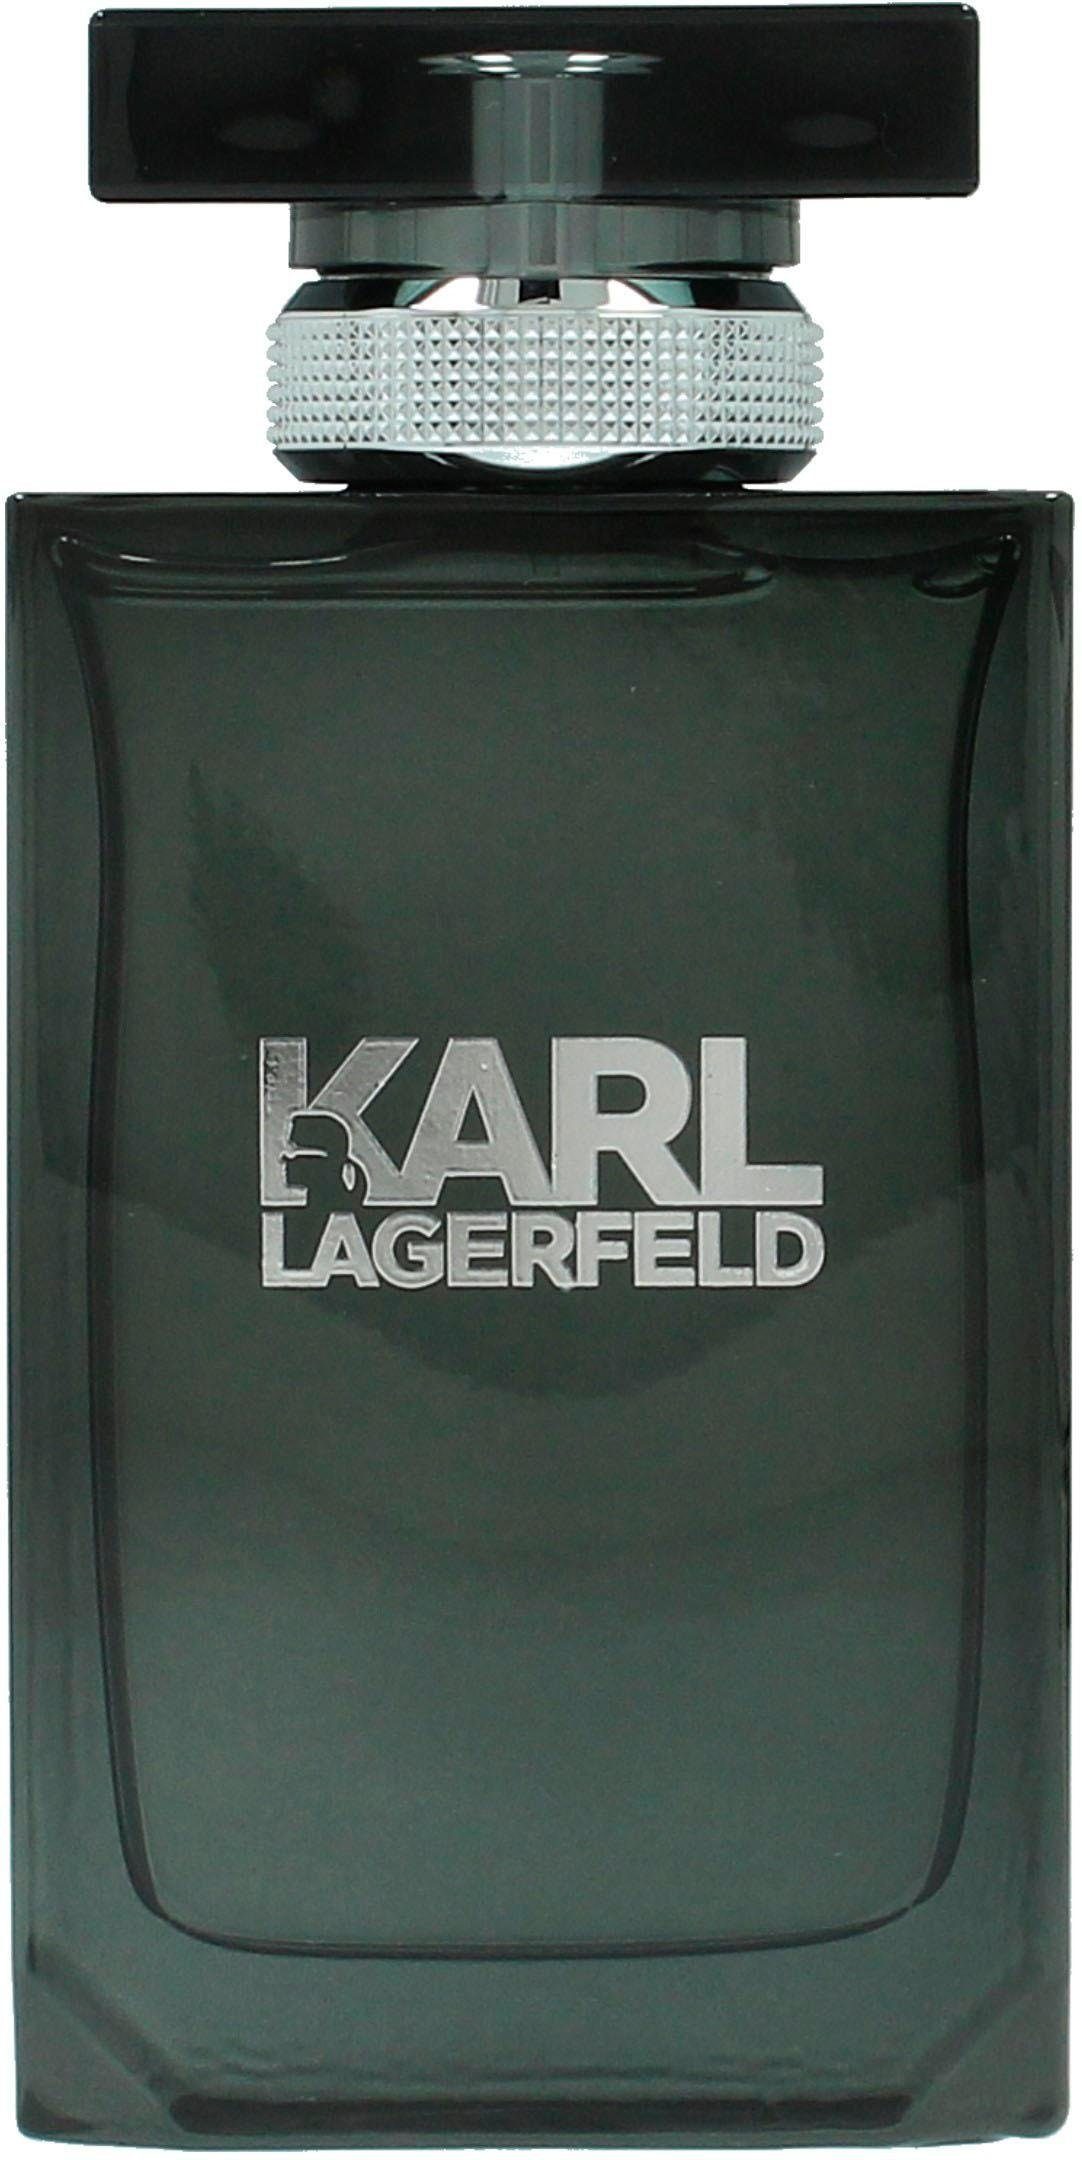 Lagerfeld KARL Homme de Eau Toilette LAGERFELD pour